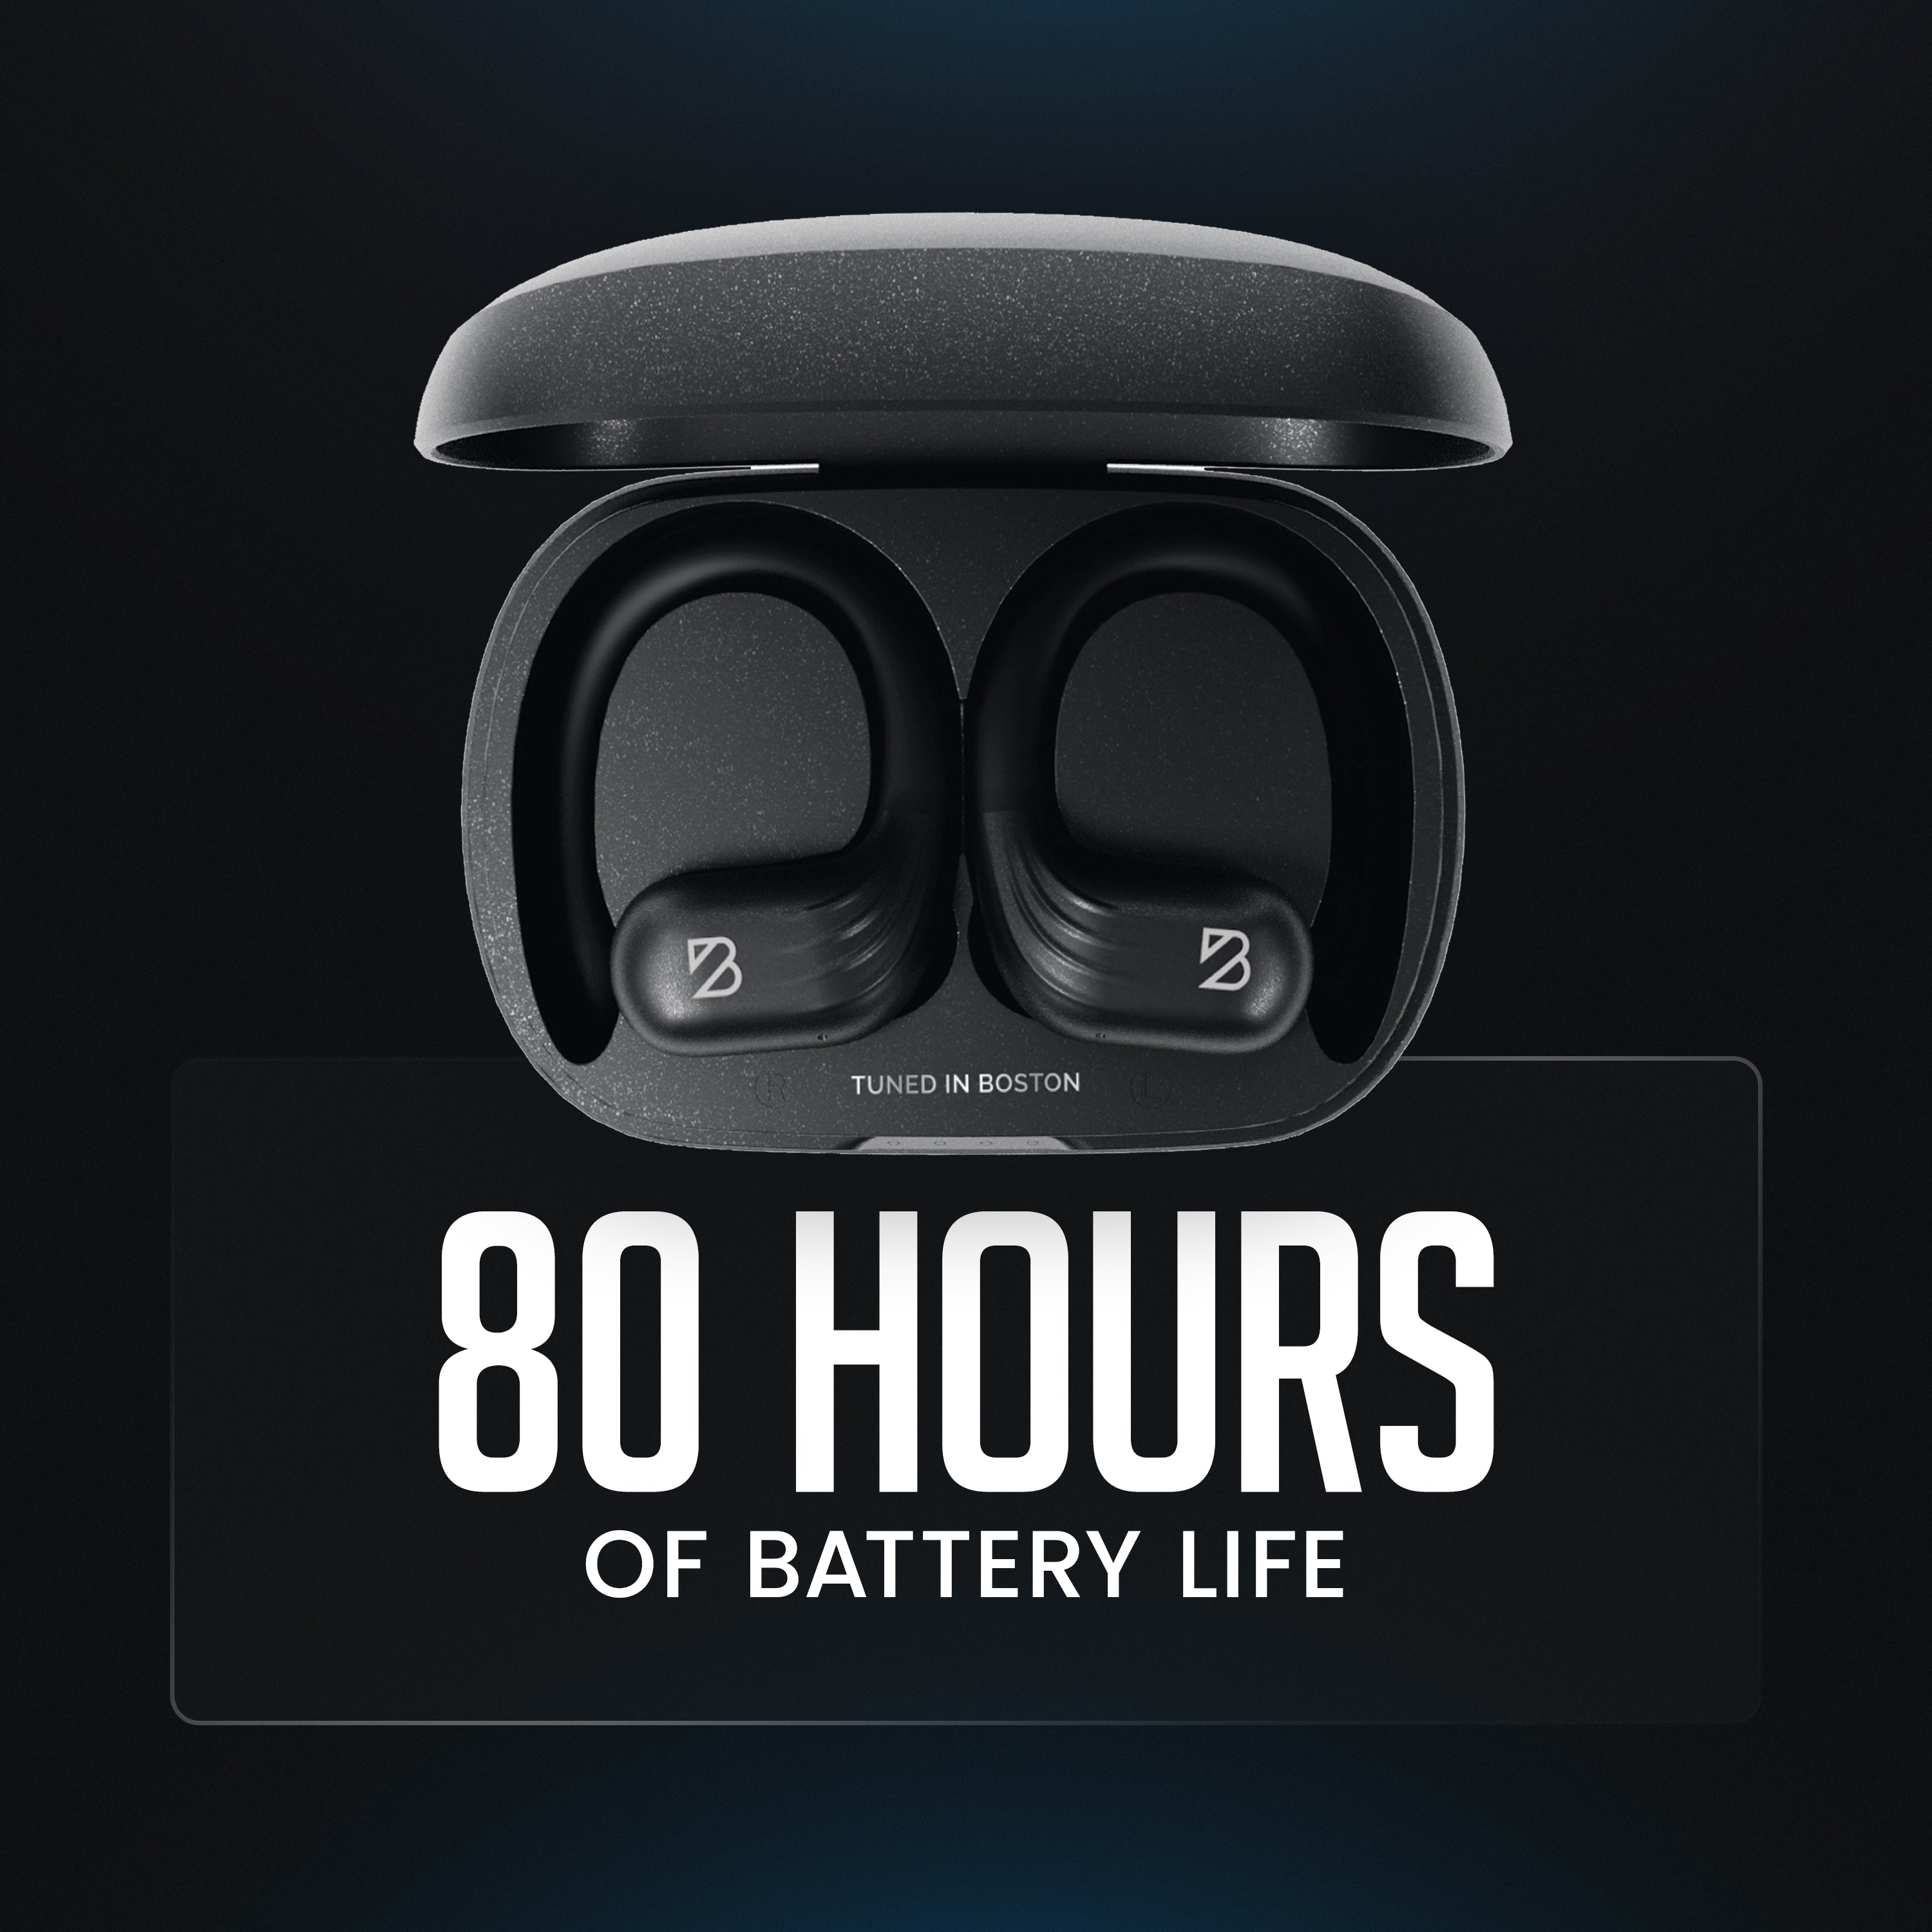 Runner 60 Wireless Earbuds - Waterproof, 80 Hours of Battery, Bass